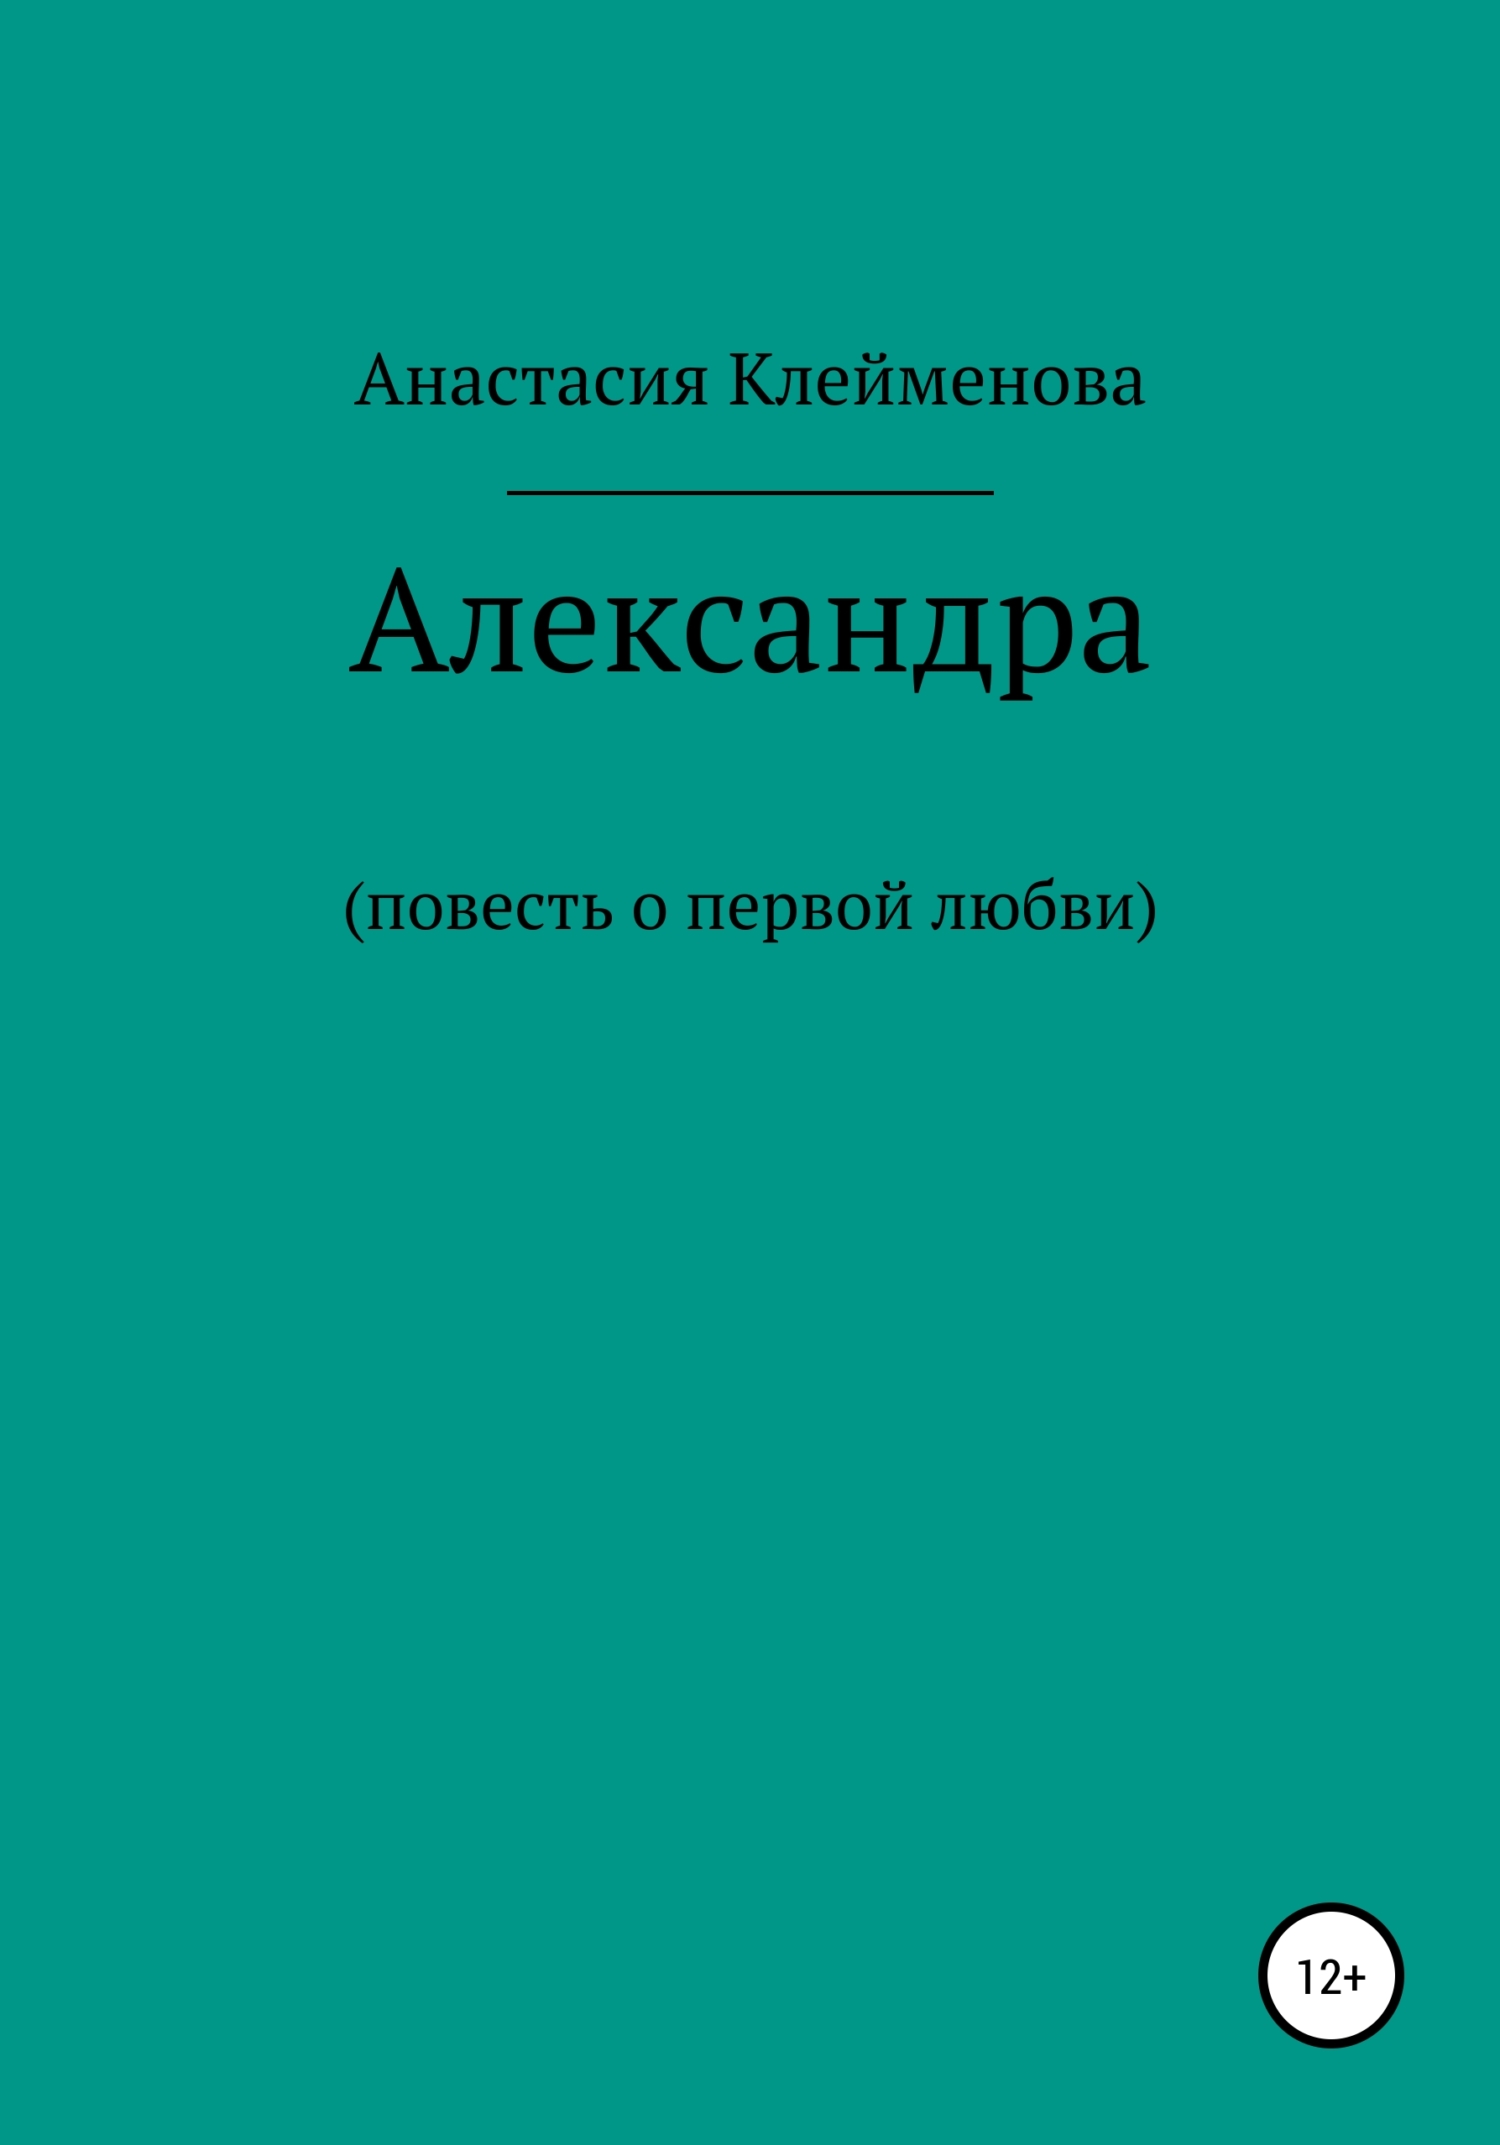 Александра - Анастасия Клейменова